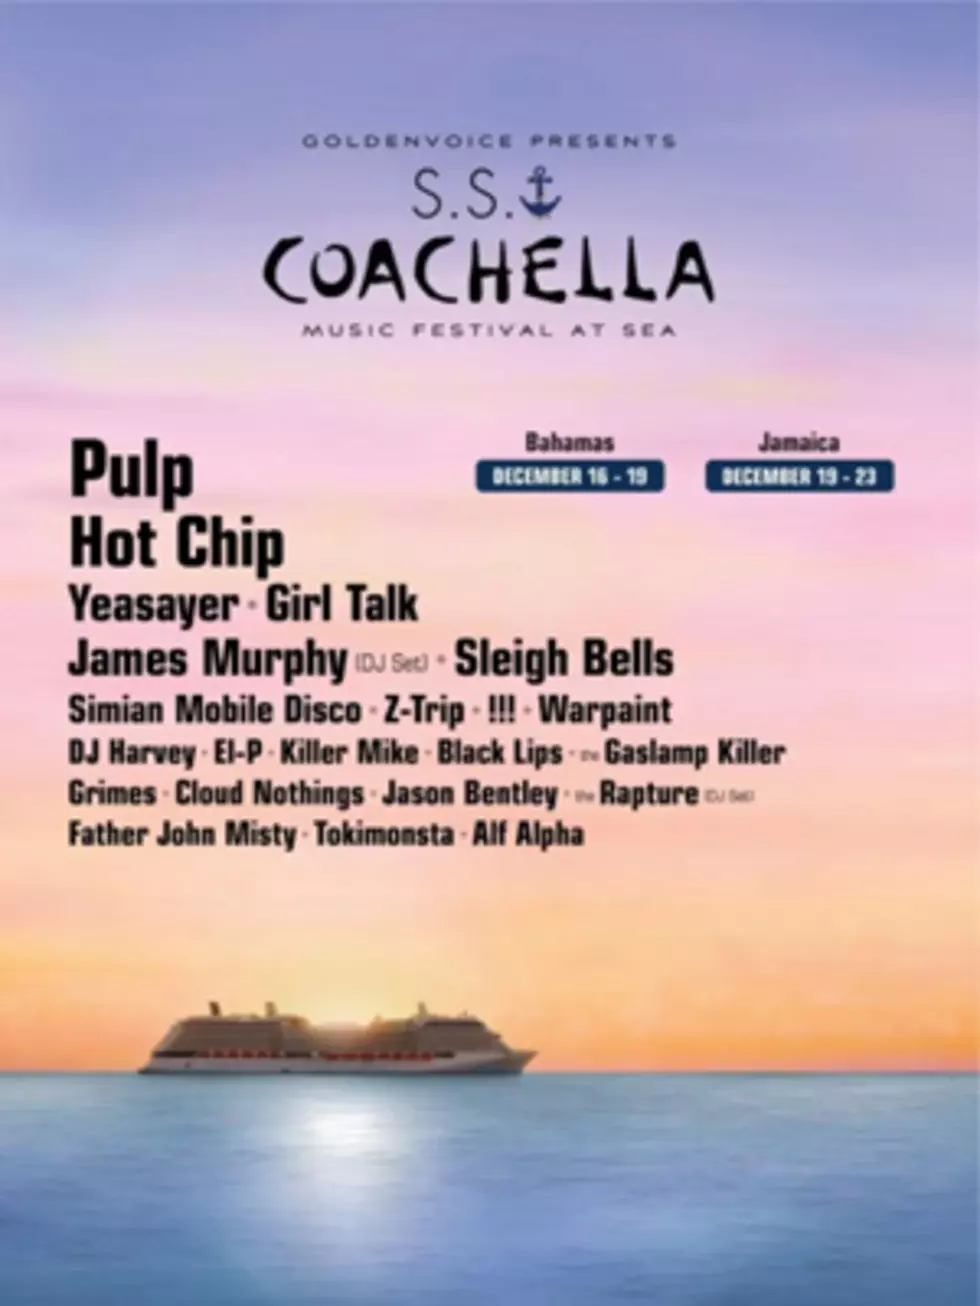 S.S. Coachella Cruise Announced